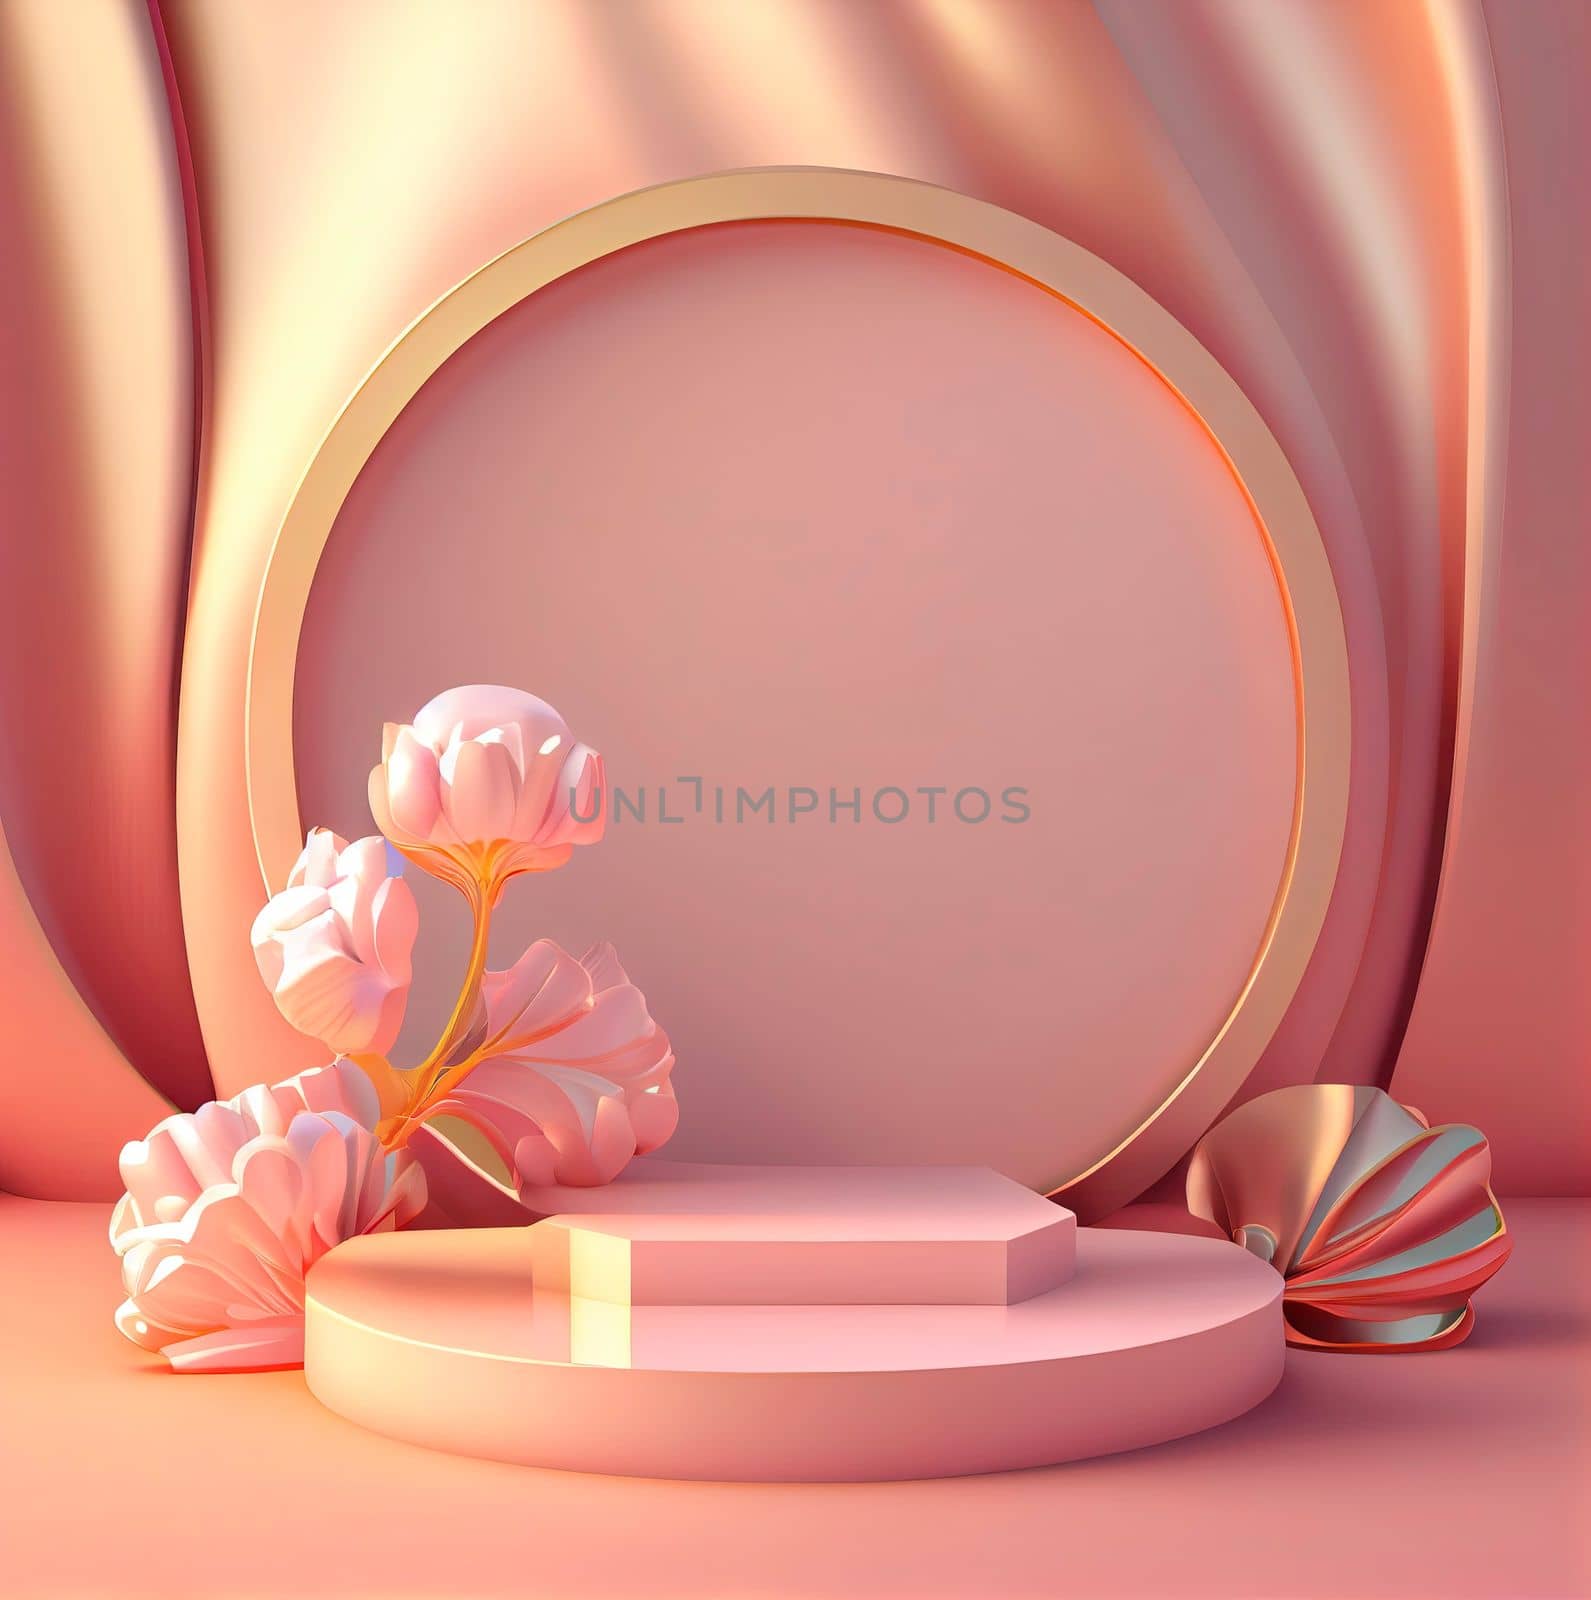 Luxury background with pink podium element